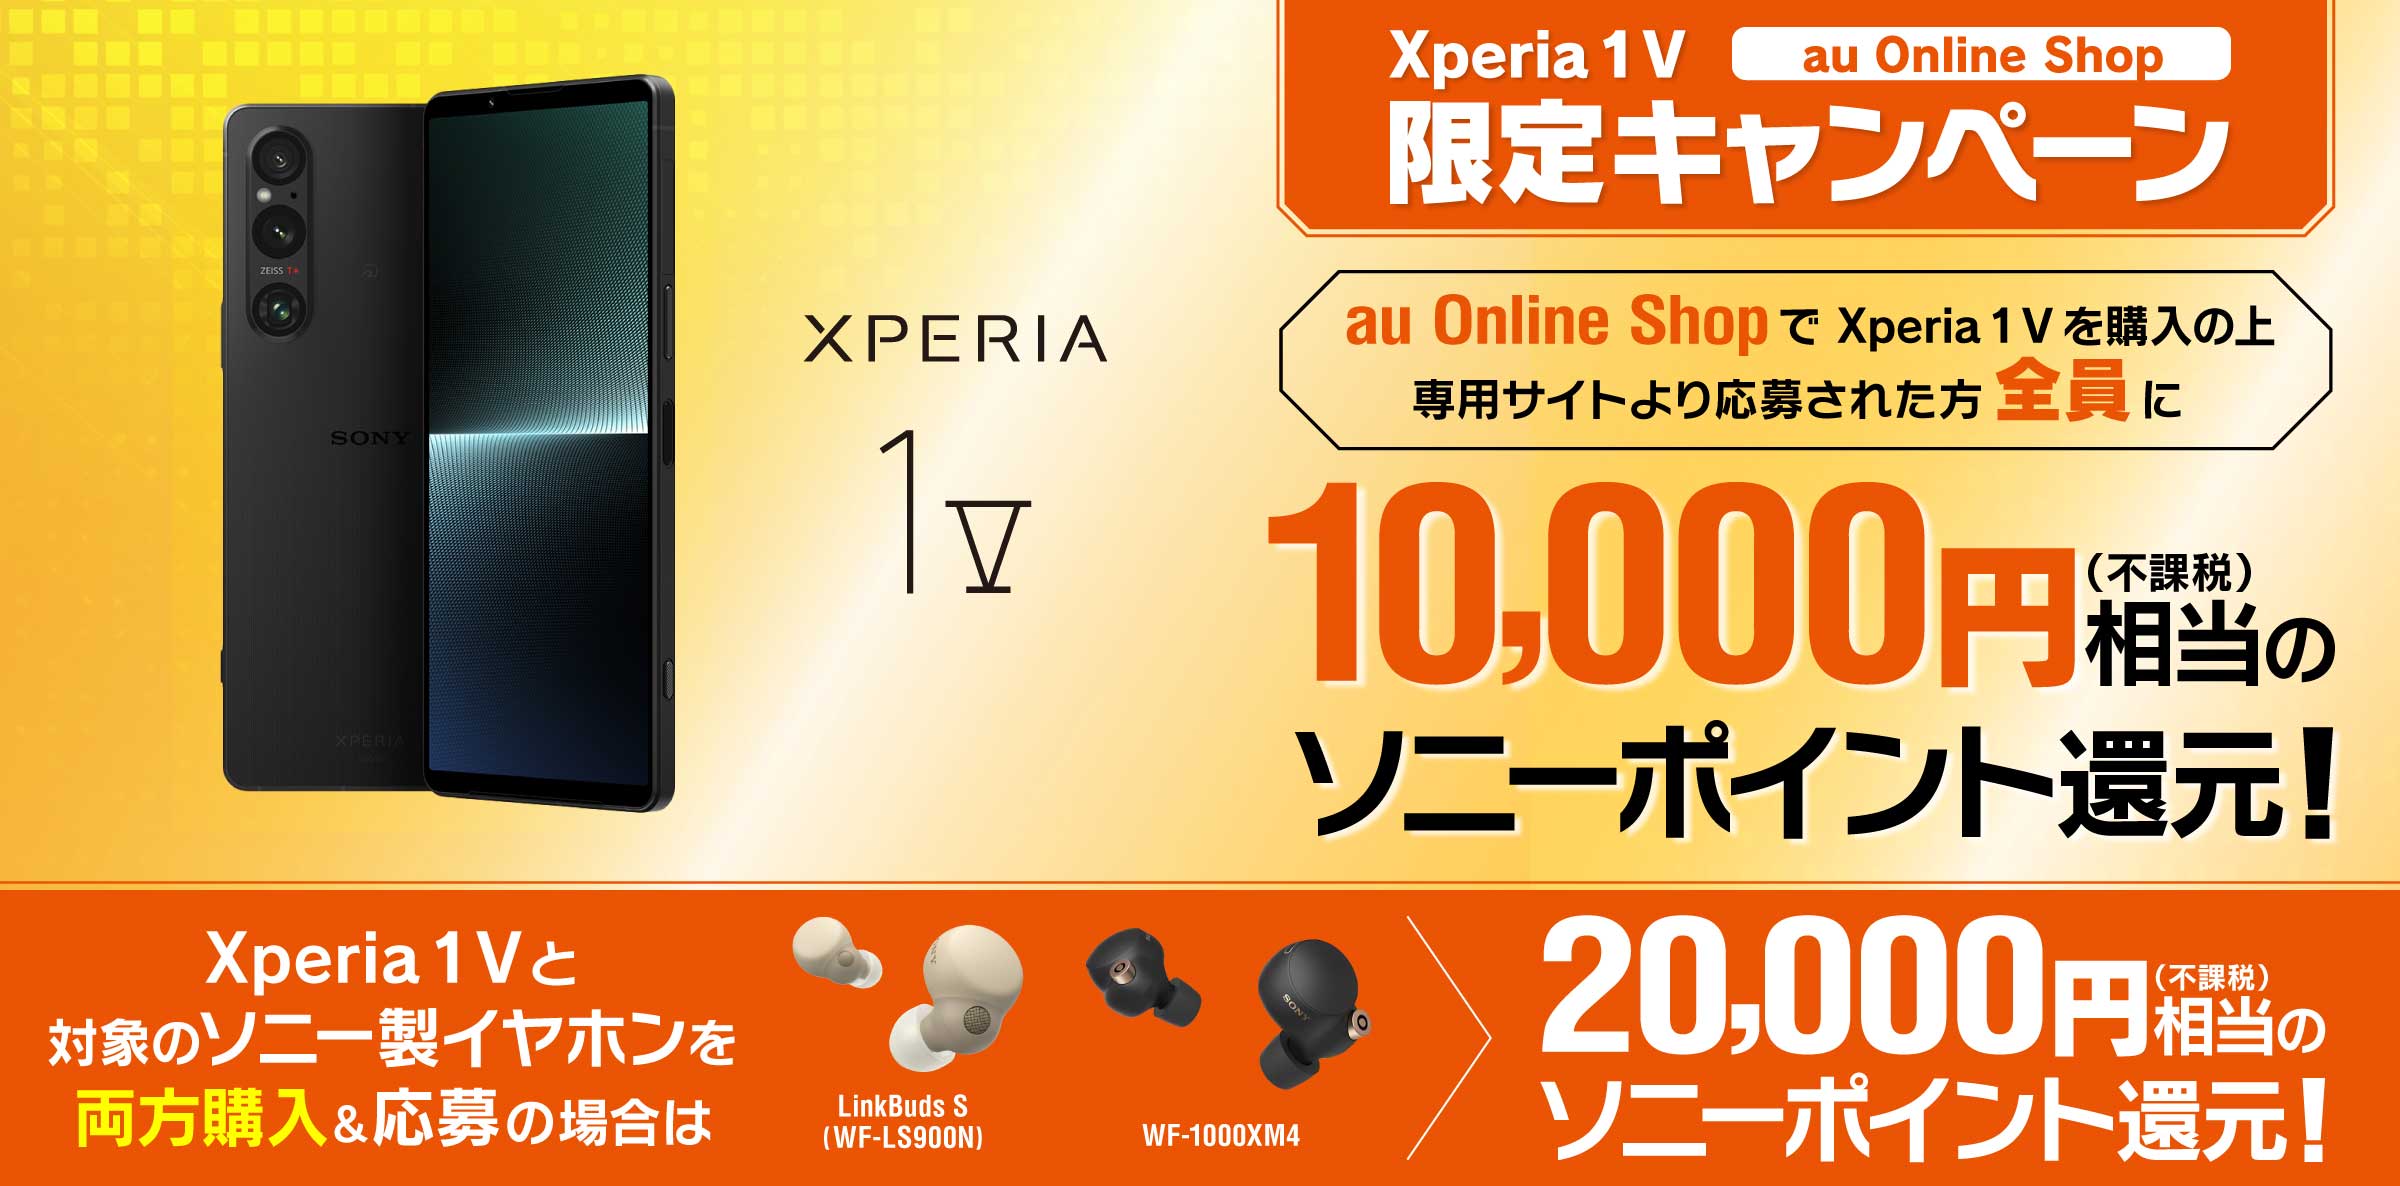 Xperia 1 V au Online Shop 限定キャンペーン au Online Shopで Xperia 1 V を購入の上、専用サイトより応募された方全員に※ 20,000円(不課税)相当のソニーポイント還元！ ※別途キャンペーンサイトへアクセスの上ご応募が必要です。